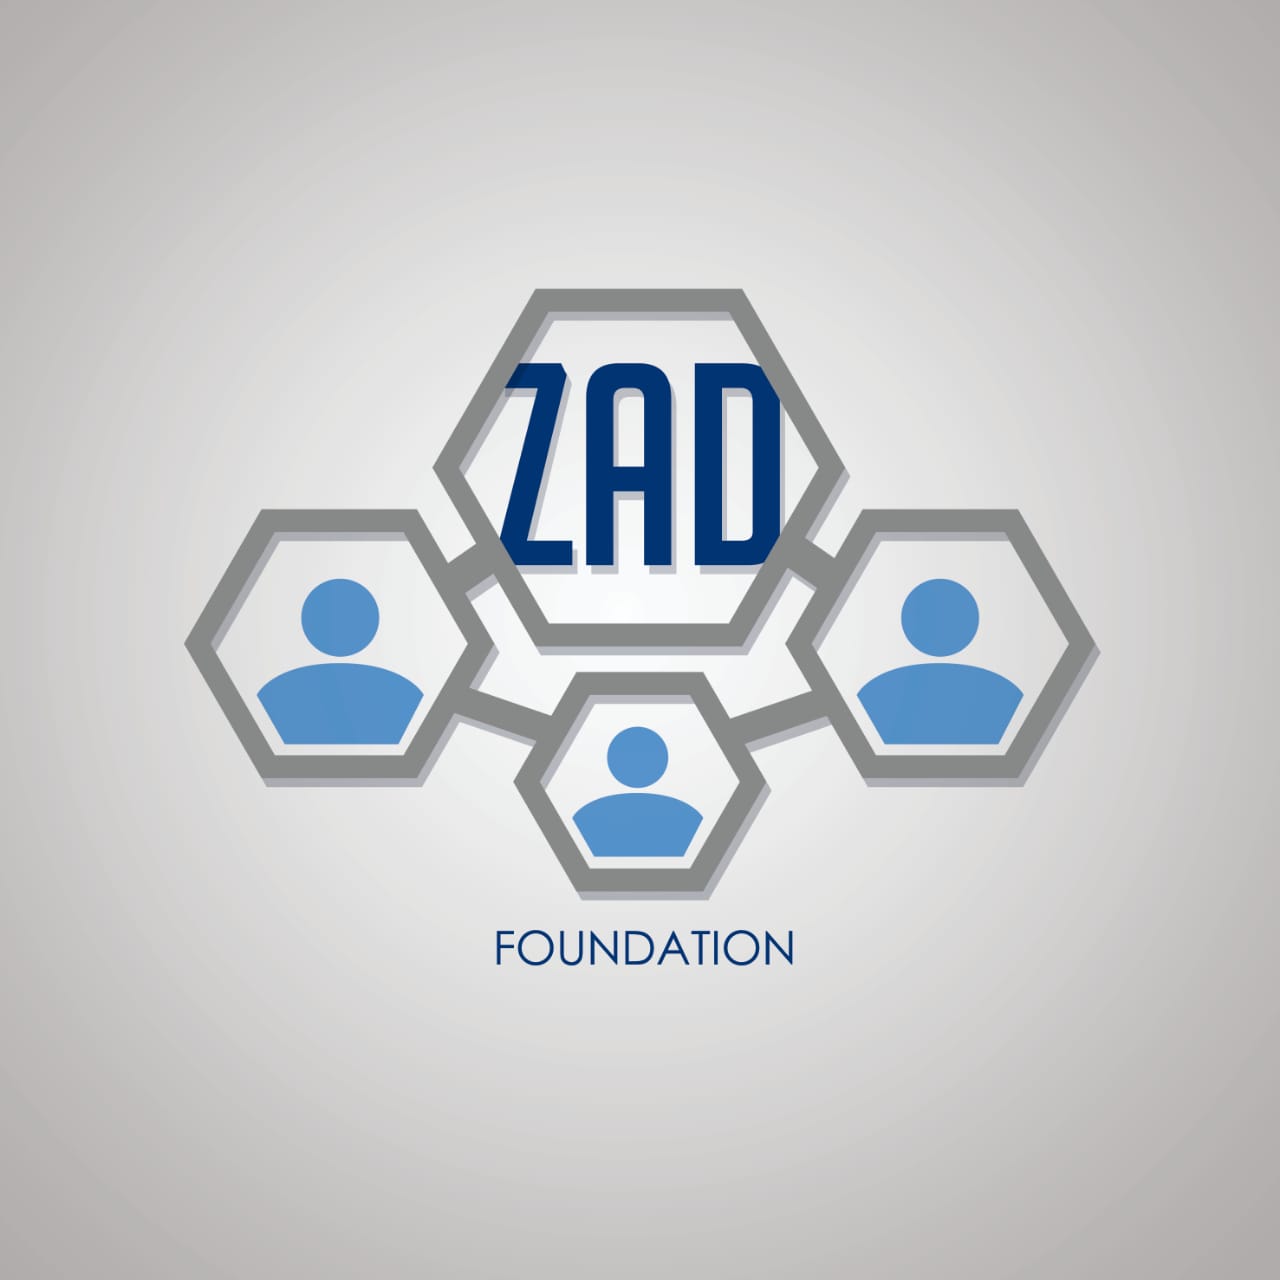 Zad a startup based